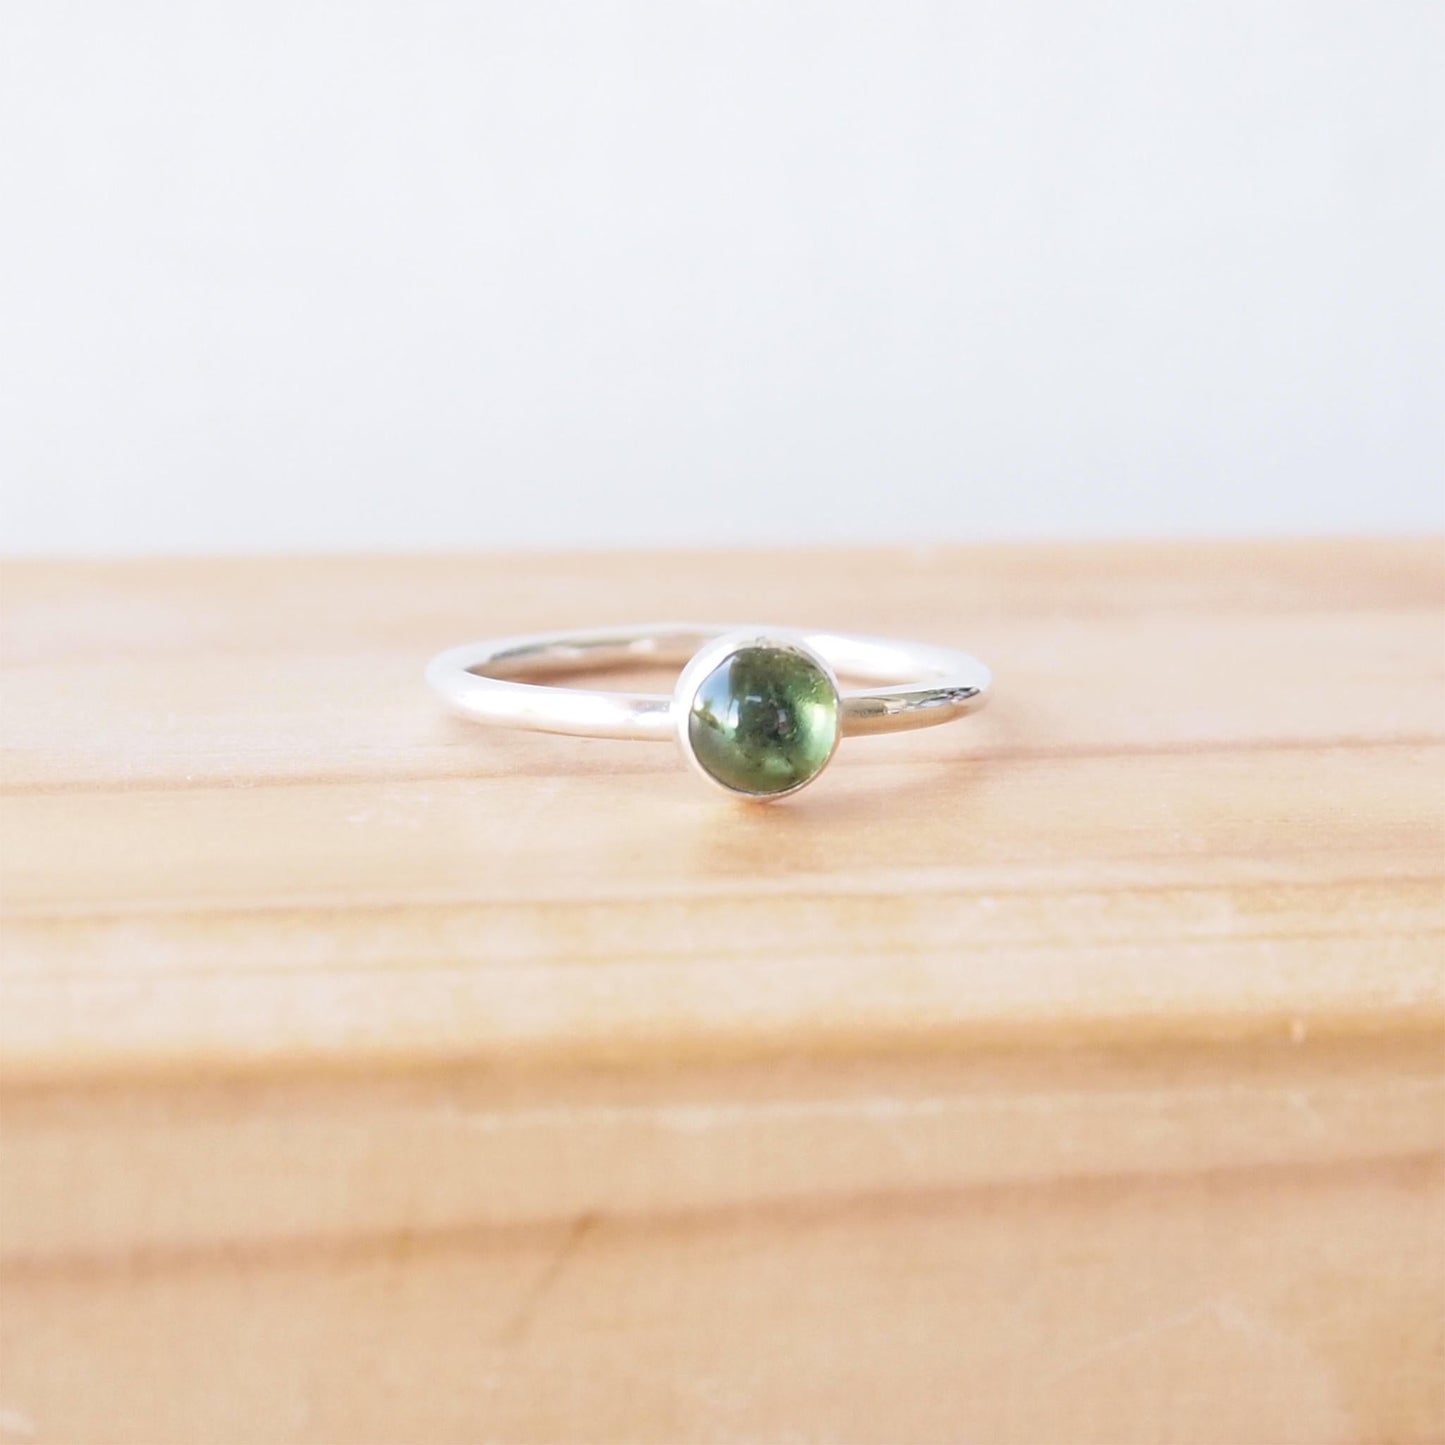 Green tourmaline ring with a 5mm moss green gemstone. Handmade in Scotland by maram jewellery